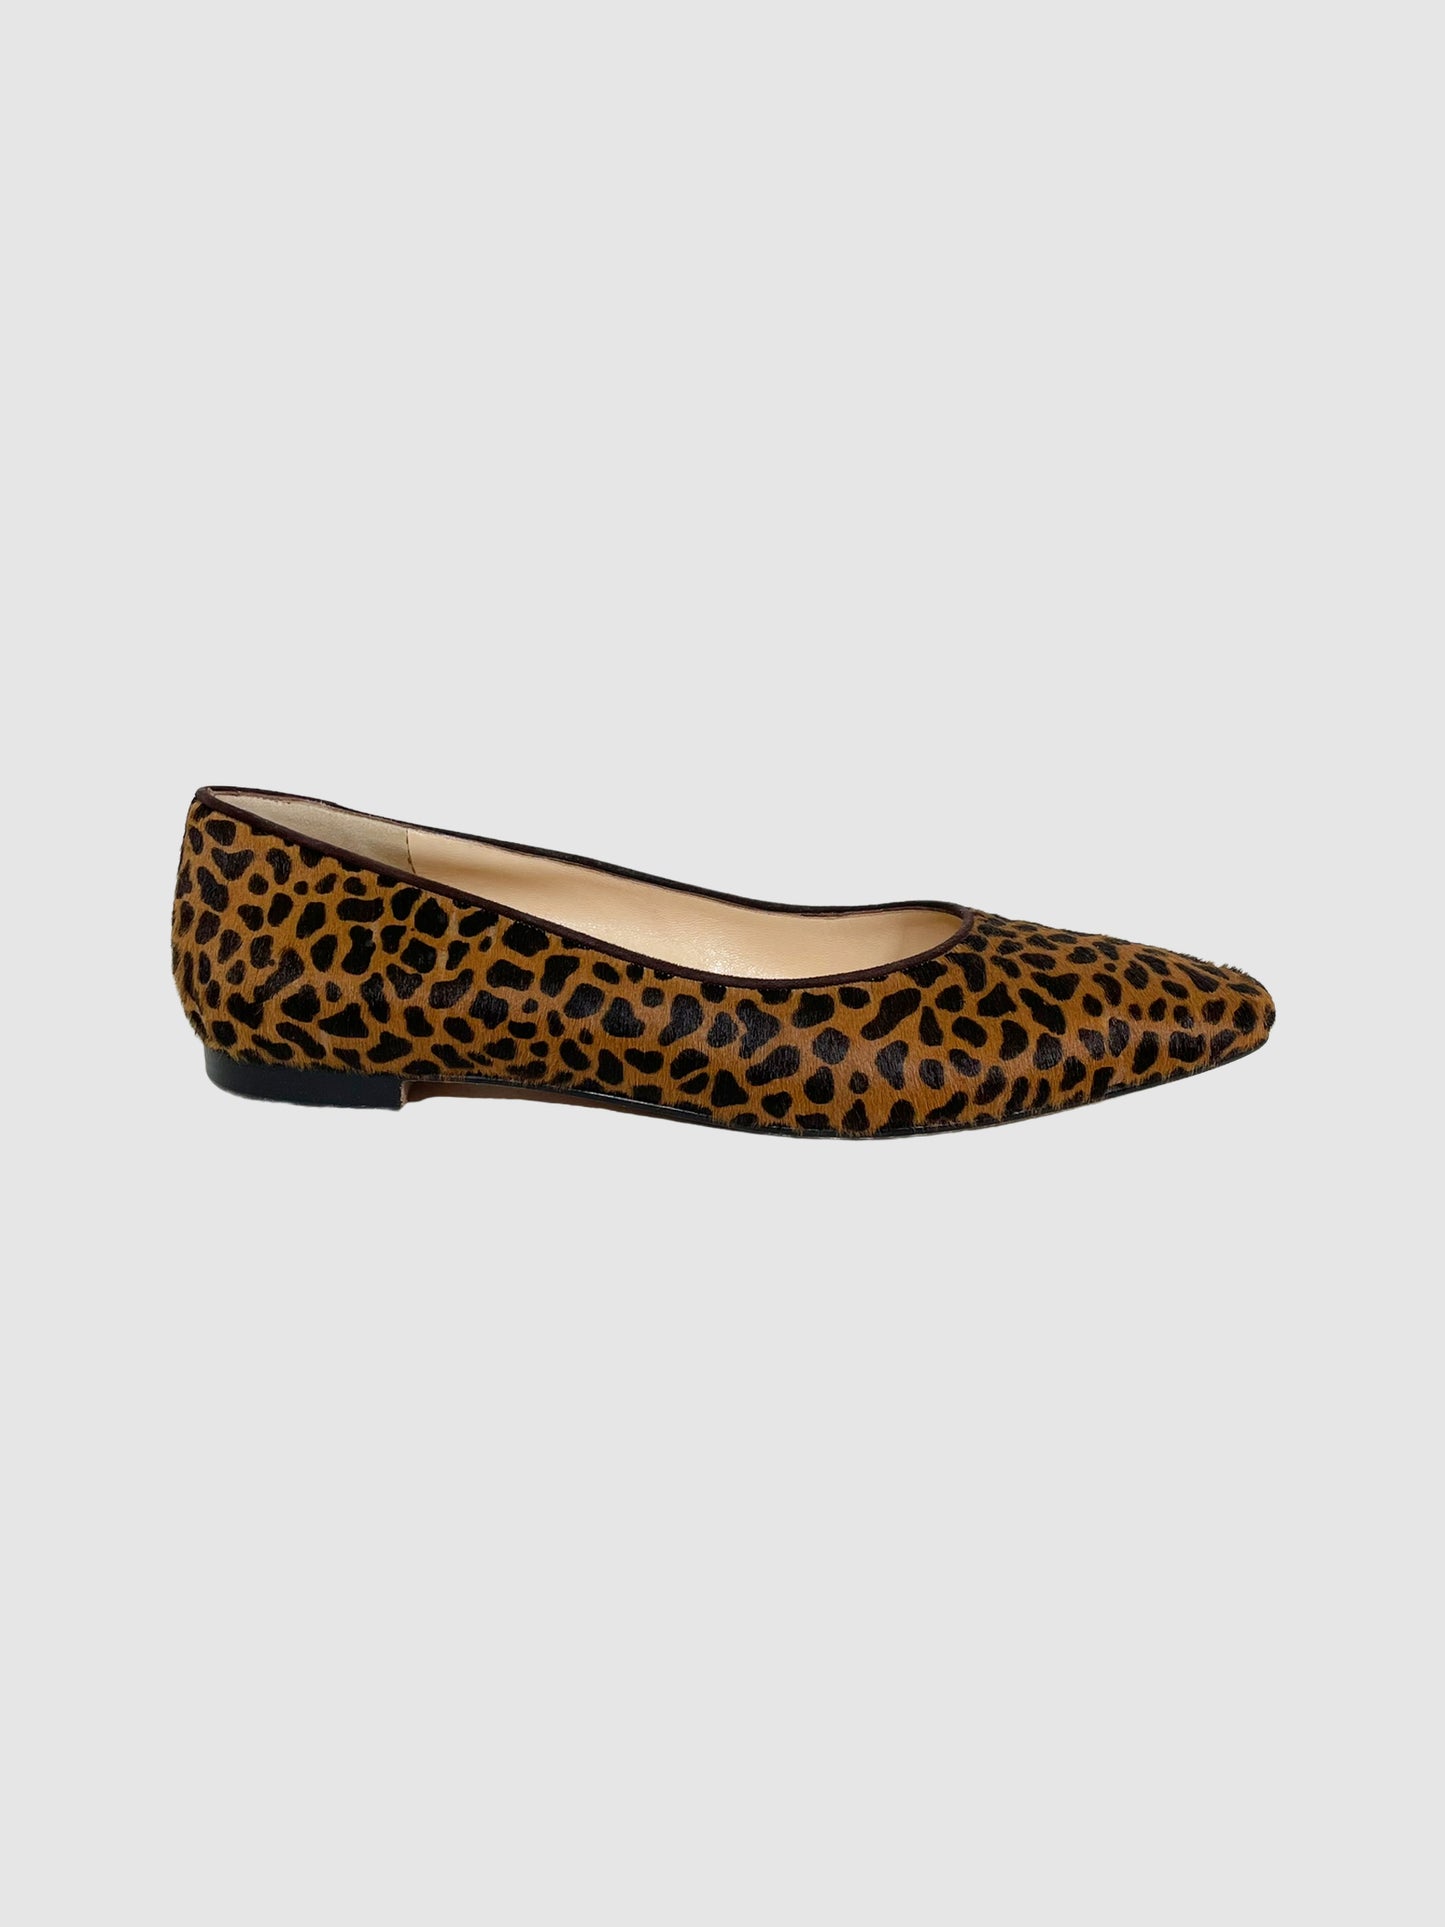 Manolo Blahnik Leopard Print Flats - Size 38